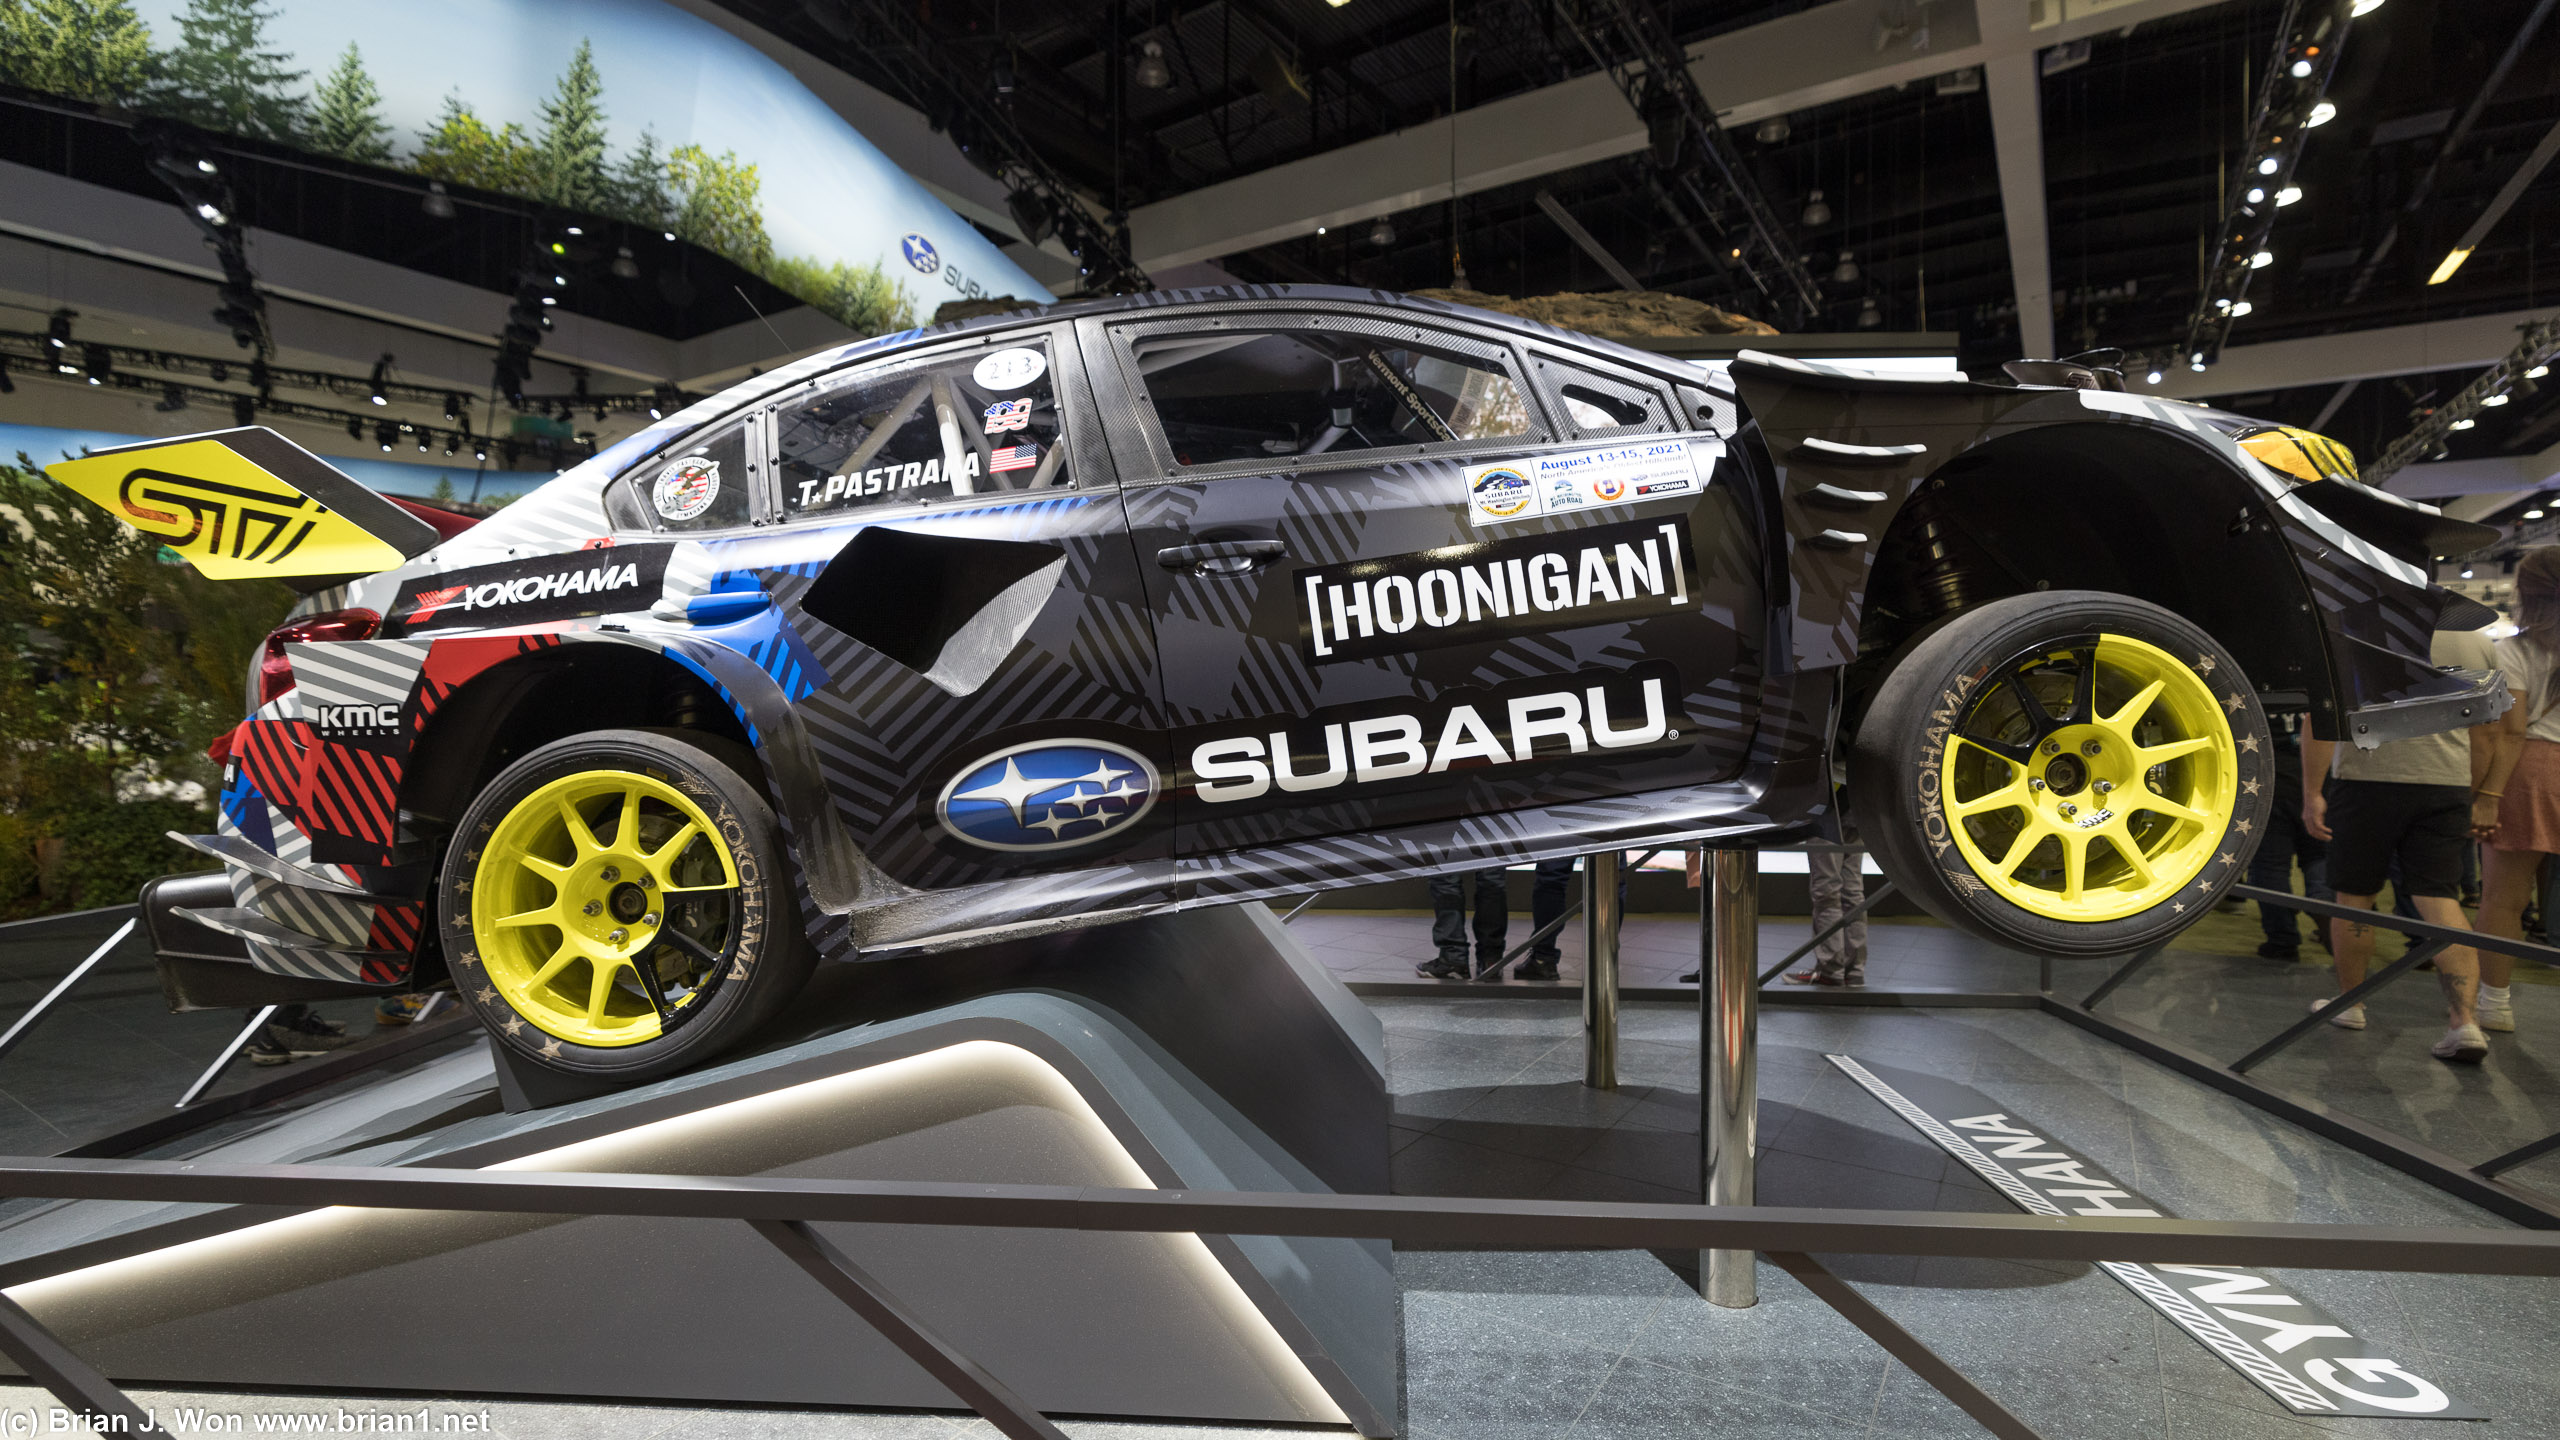 Subaru WRX Hoonigan rally car.